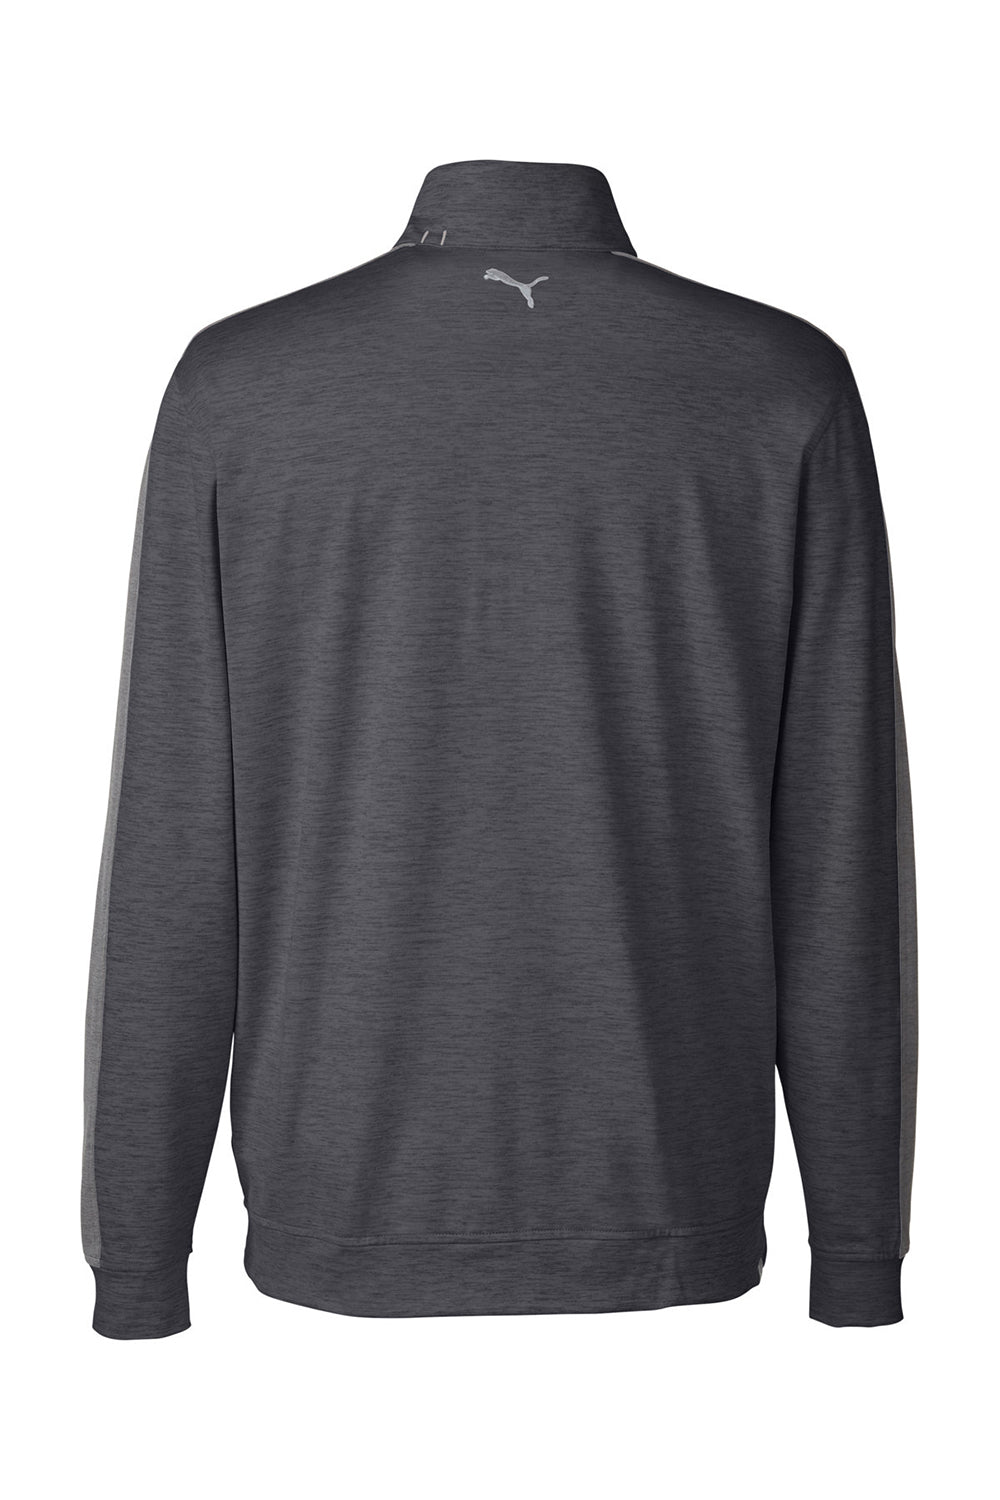 Puma 599129 Mens Cloudspun 1/4 Zip Sweatshirt Heather Black/Quiet Shade Grey Flat Back